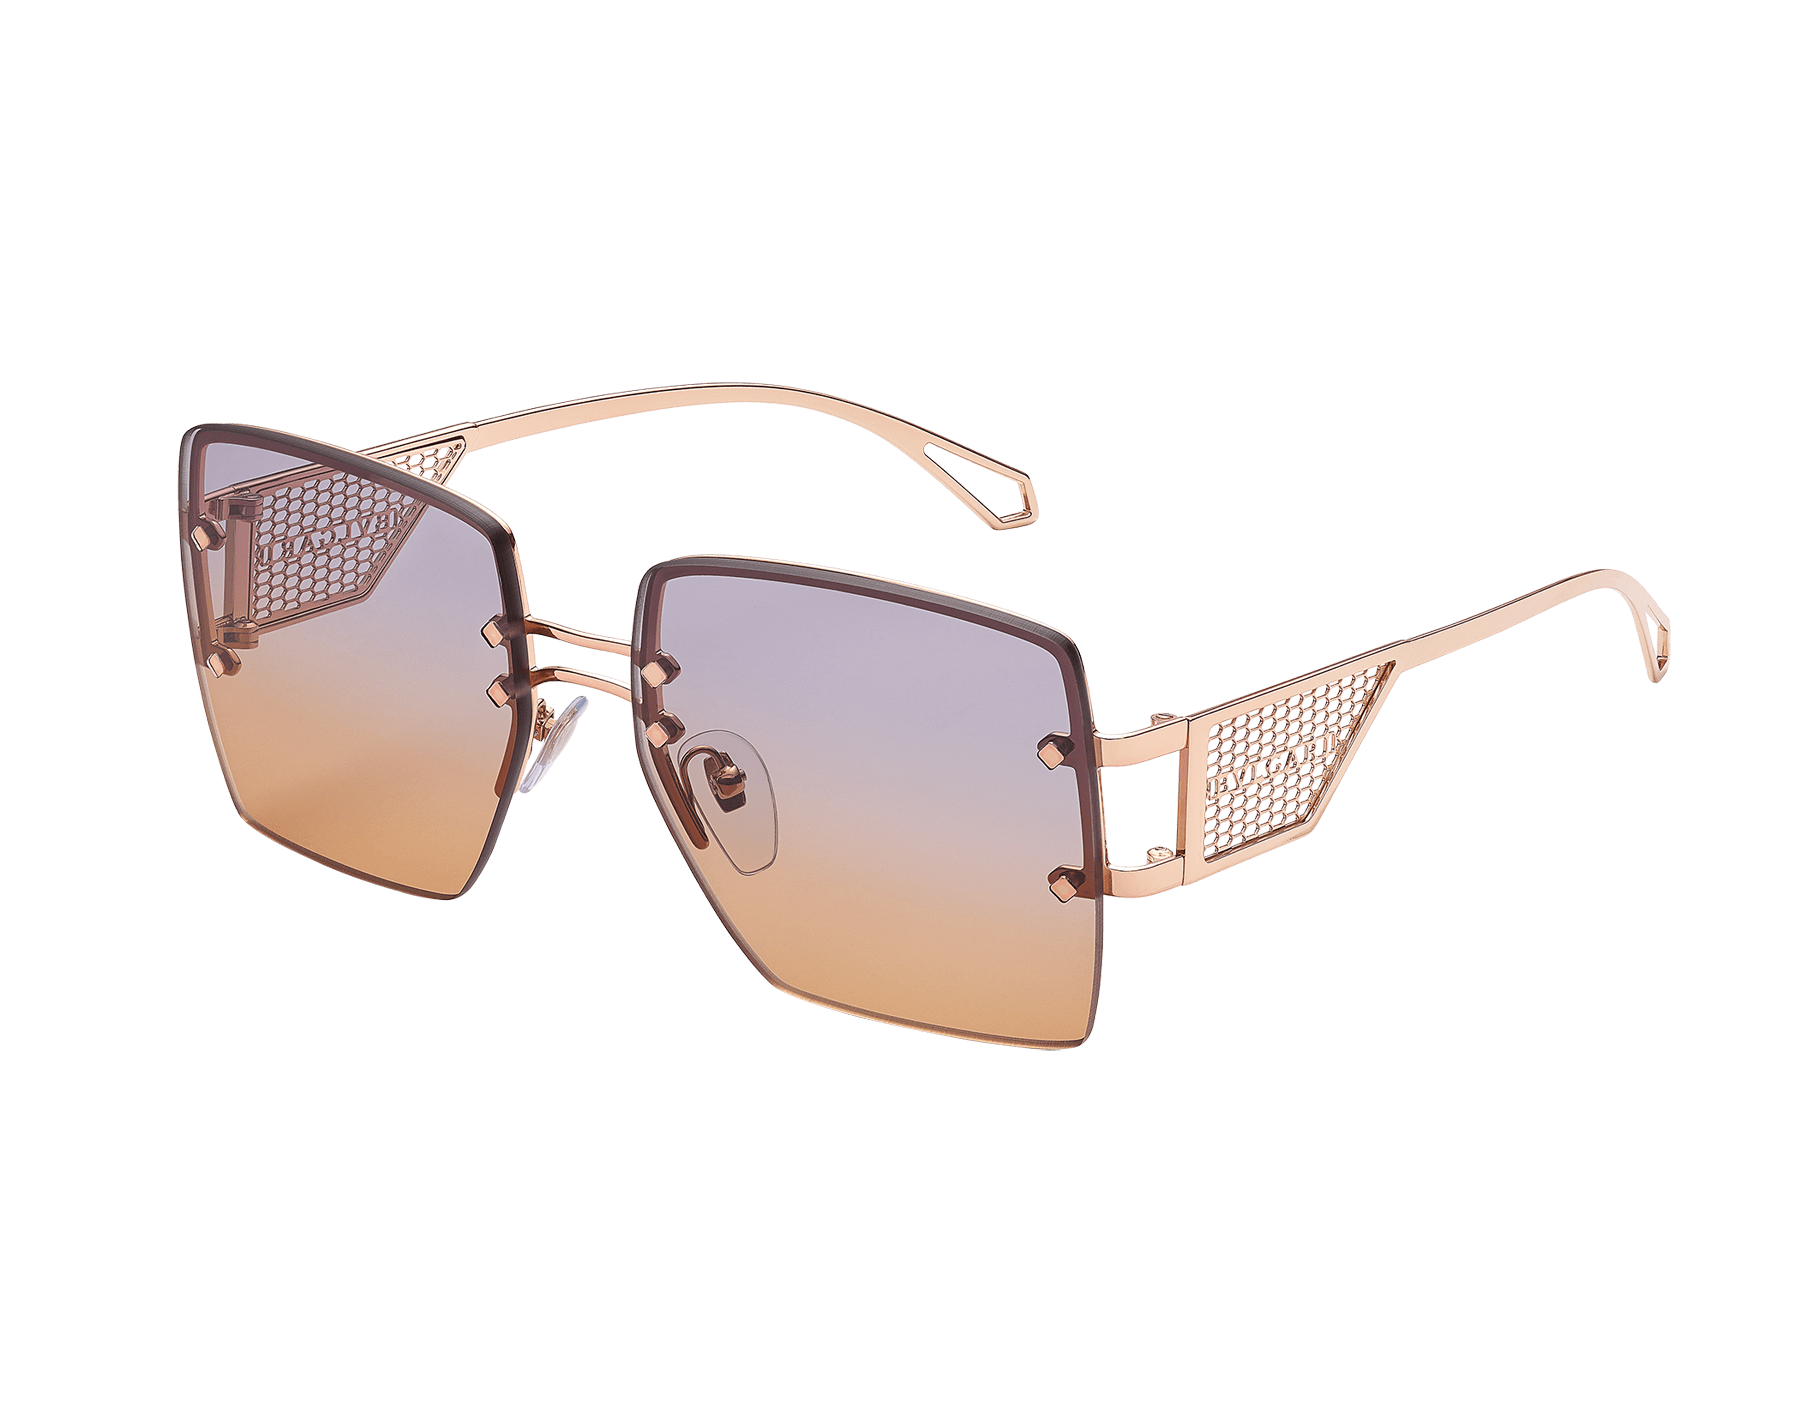 Serpenti "Vipermesh" squared metal sunglasses 904184 image 1